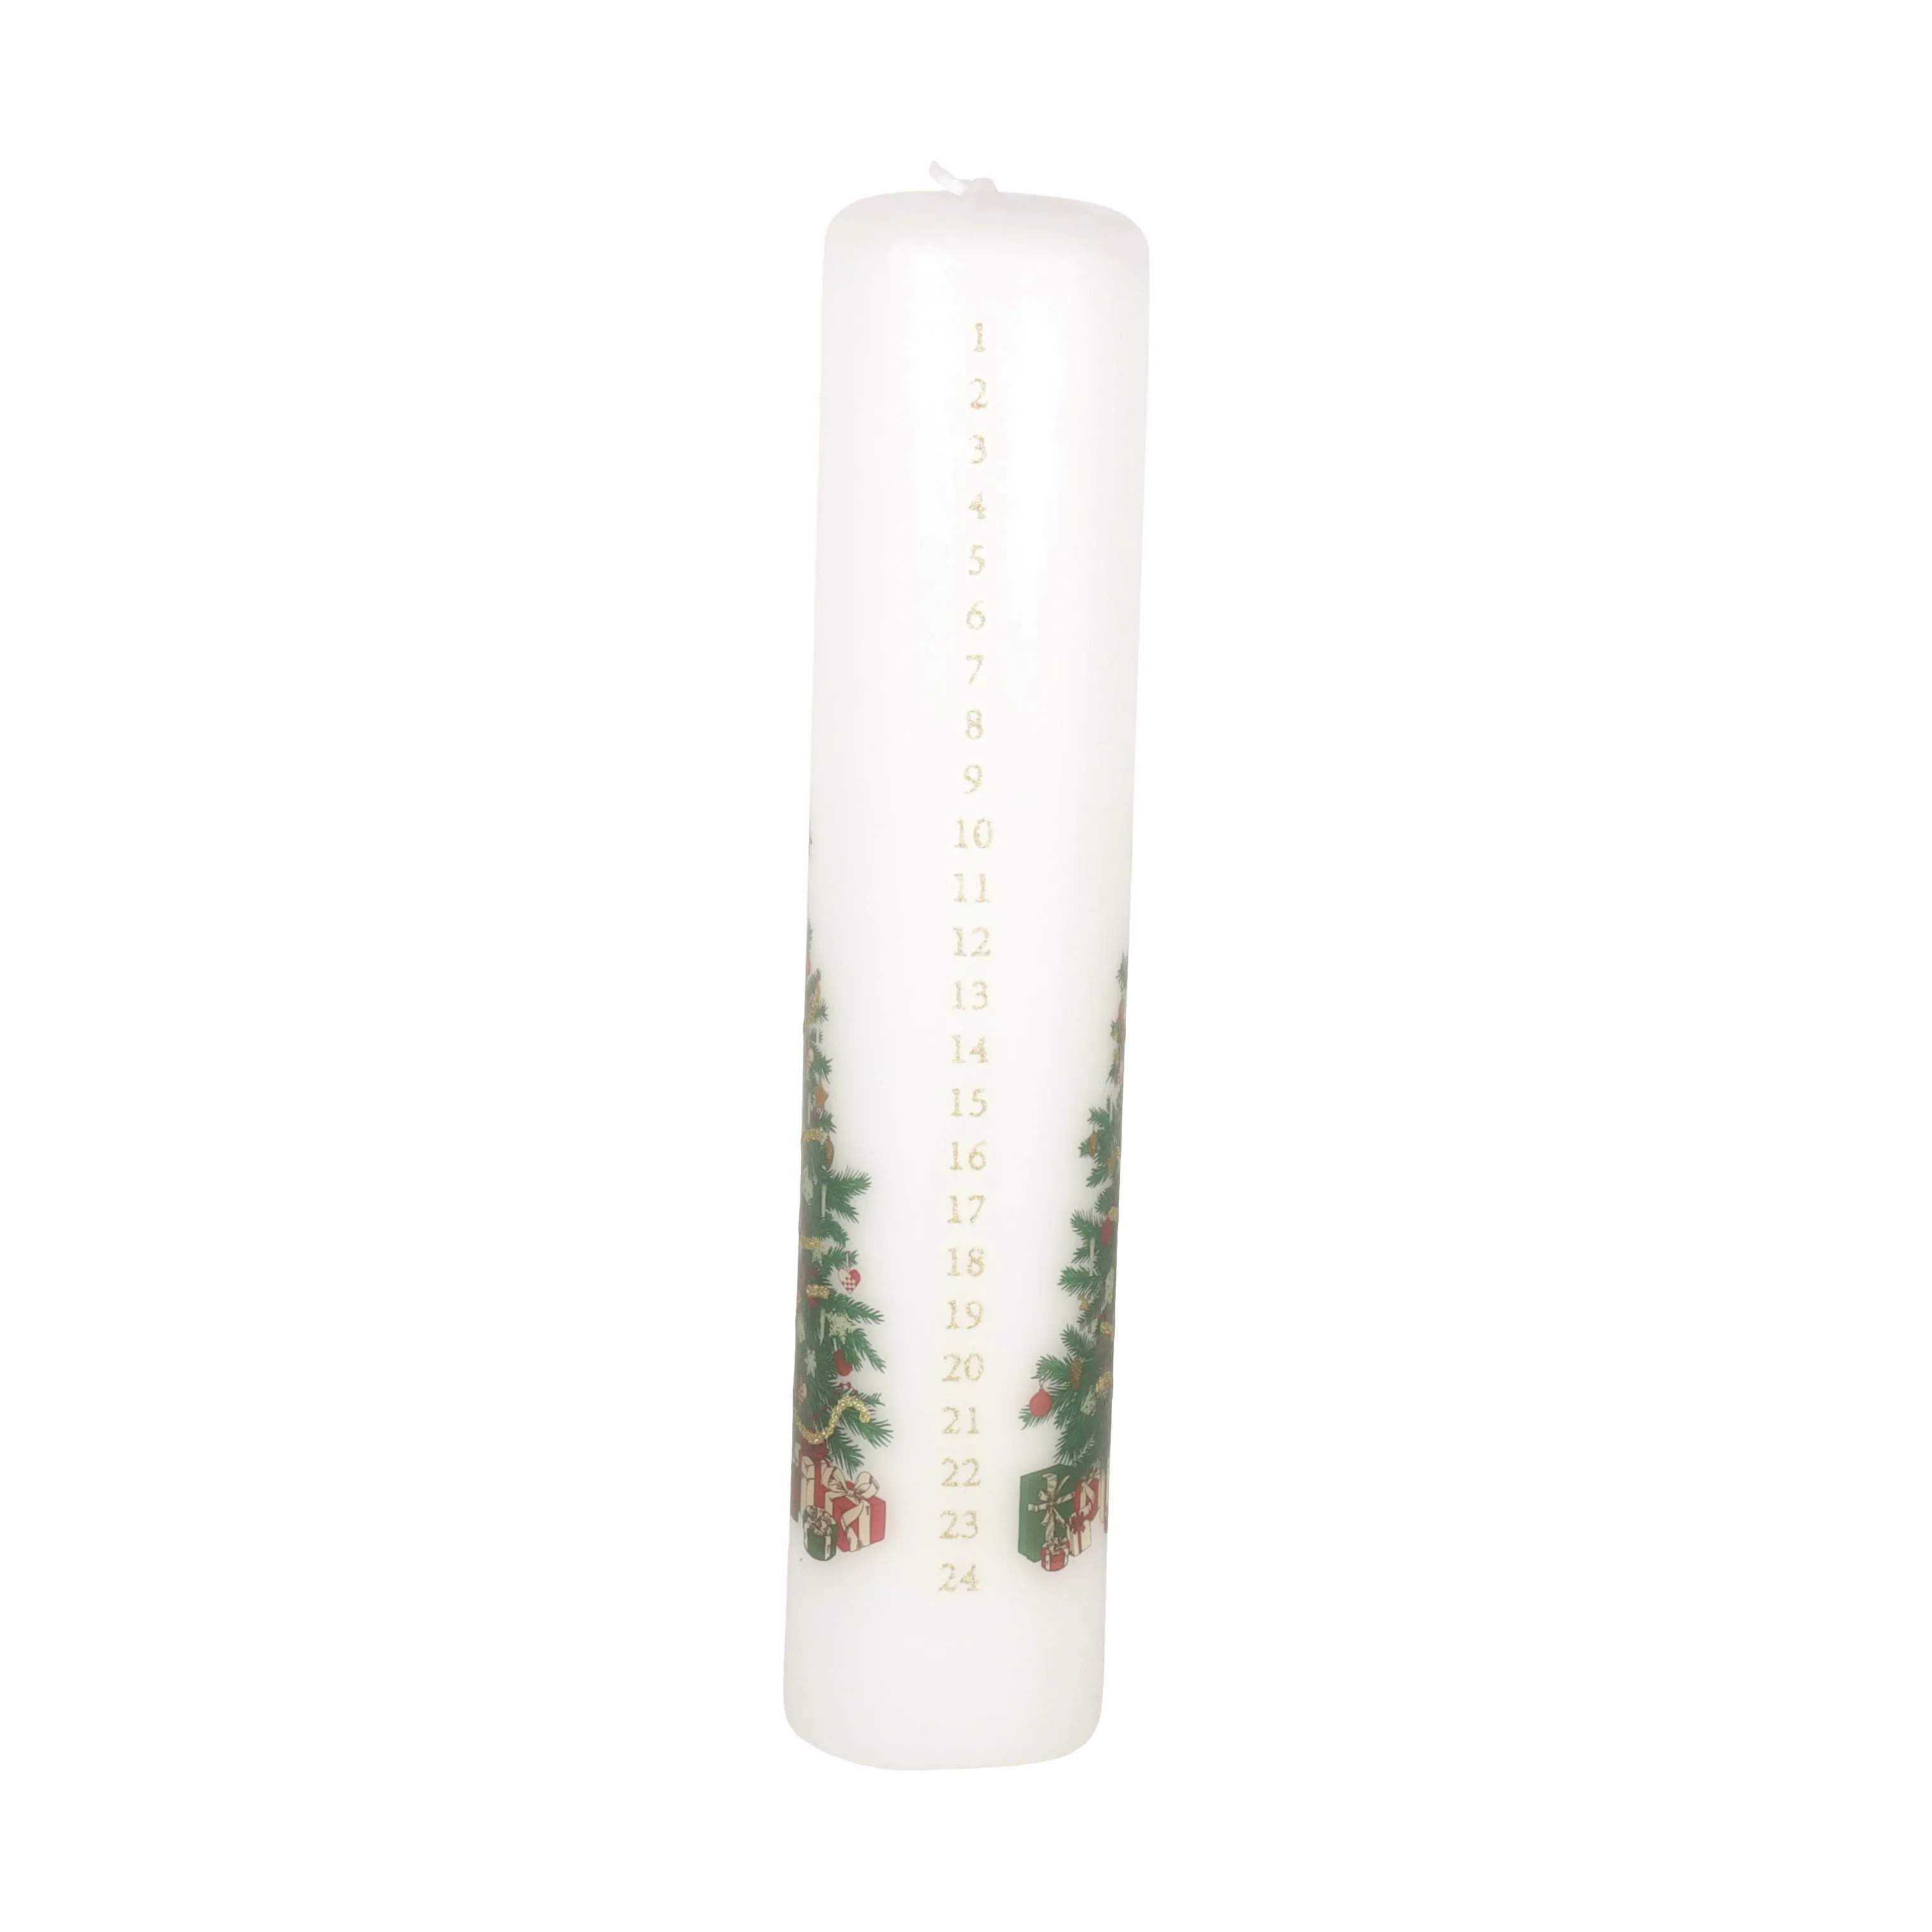 Kalenderlys - Pyntet træ, white/green, large